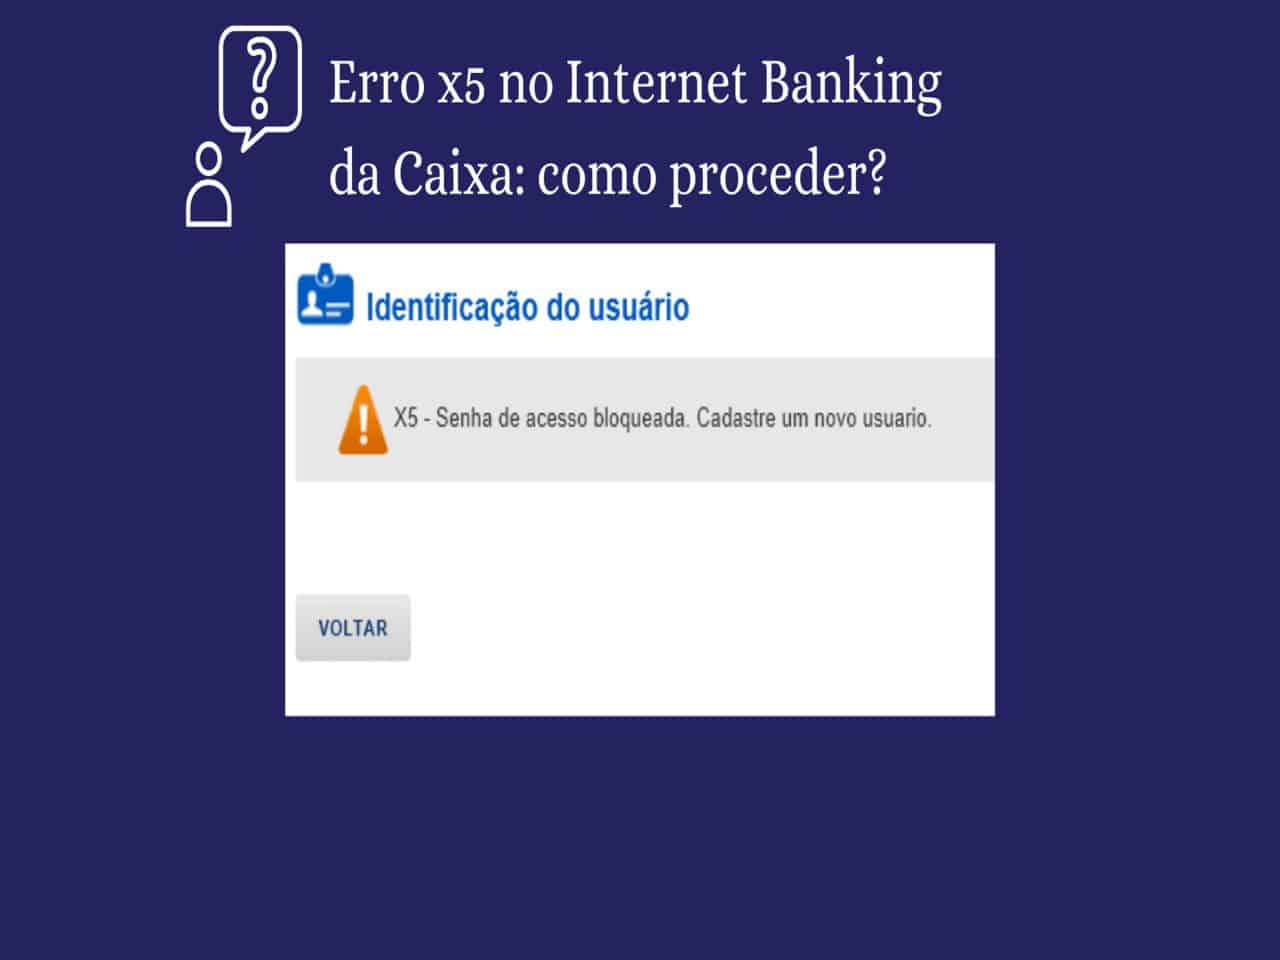 caixa internet banking